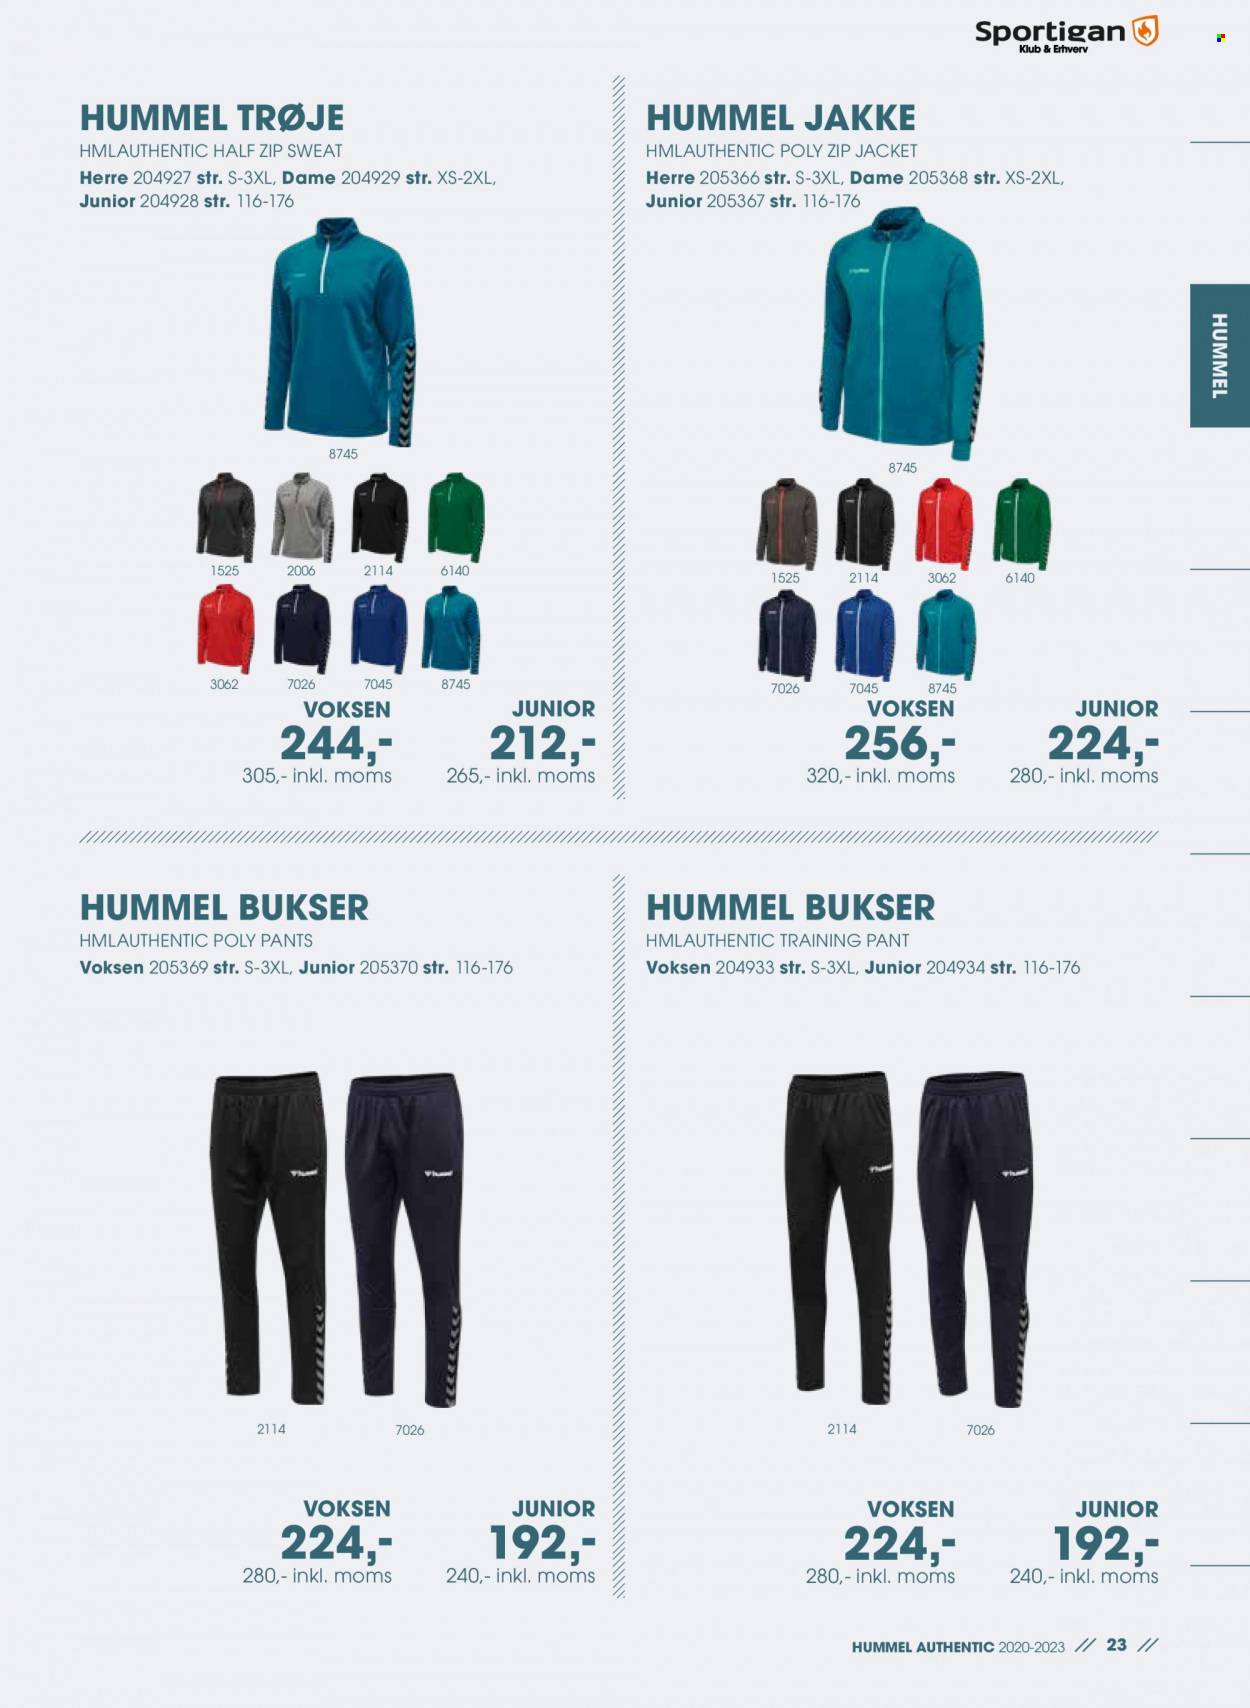 thumbnail - Sportigan tilbud  - tilbudsprodukter - Hummel, jakke, bukser, trøje. Side 23.